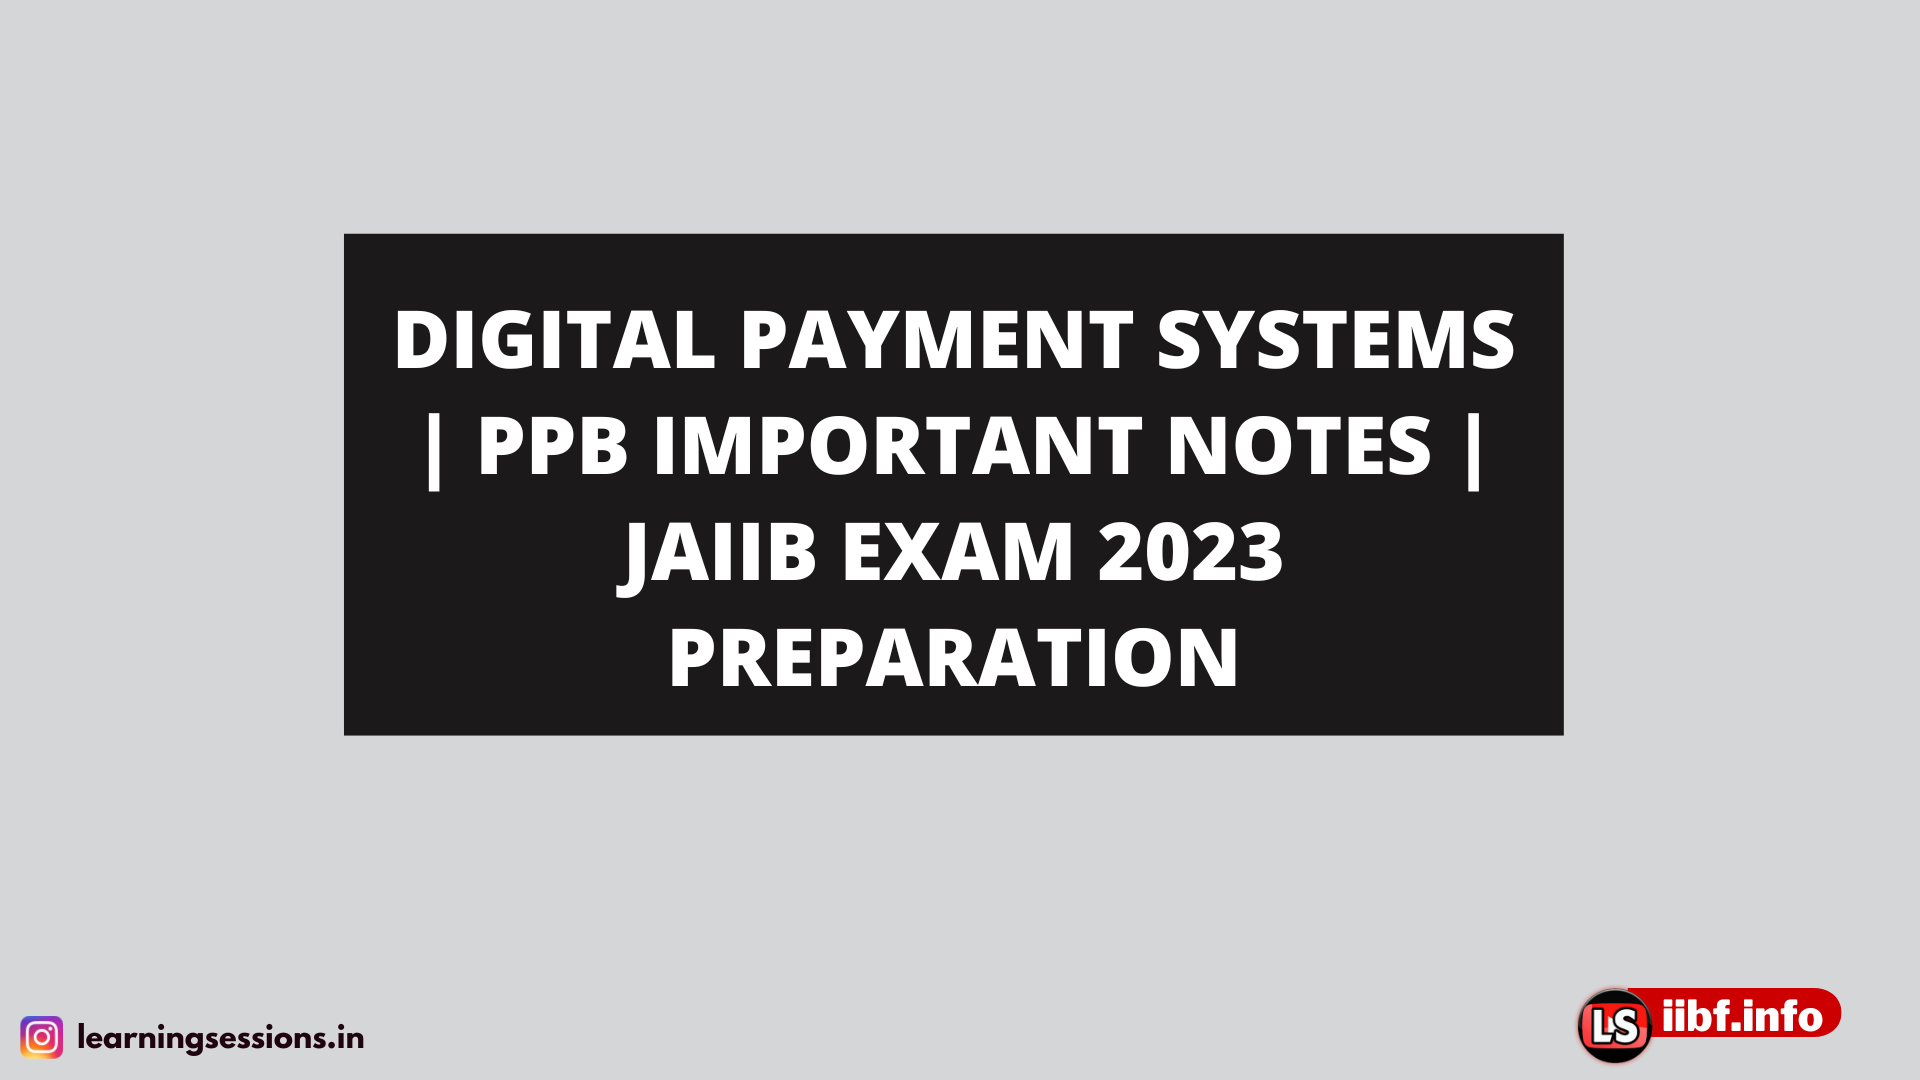 DIGITAL PAYMENT SYSTEMS | PPB IMPORTANT NOTES | JAIIB EXAM 2023 PREPARATION